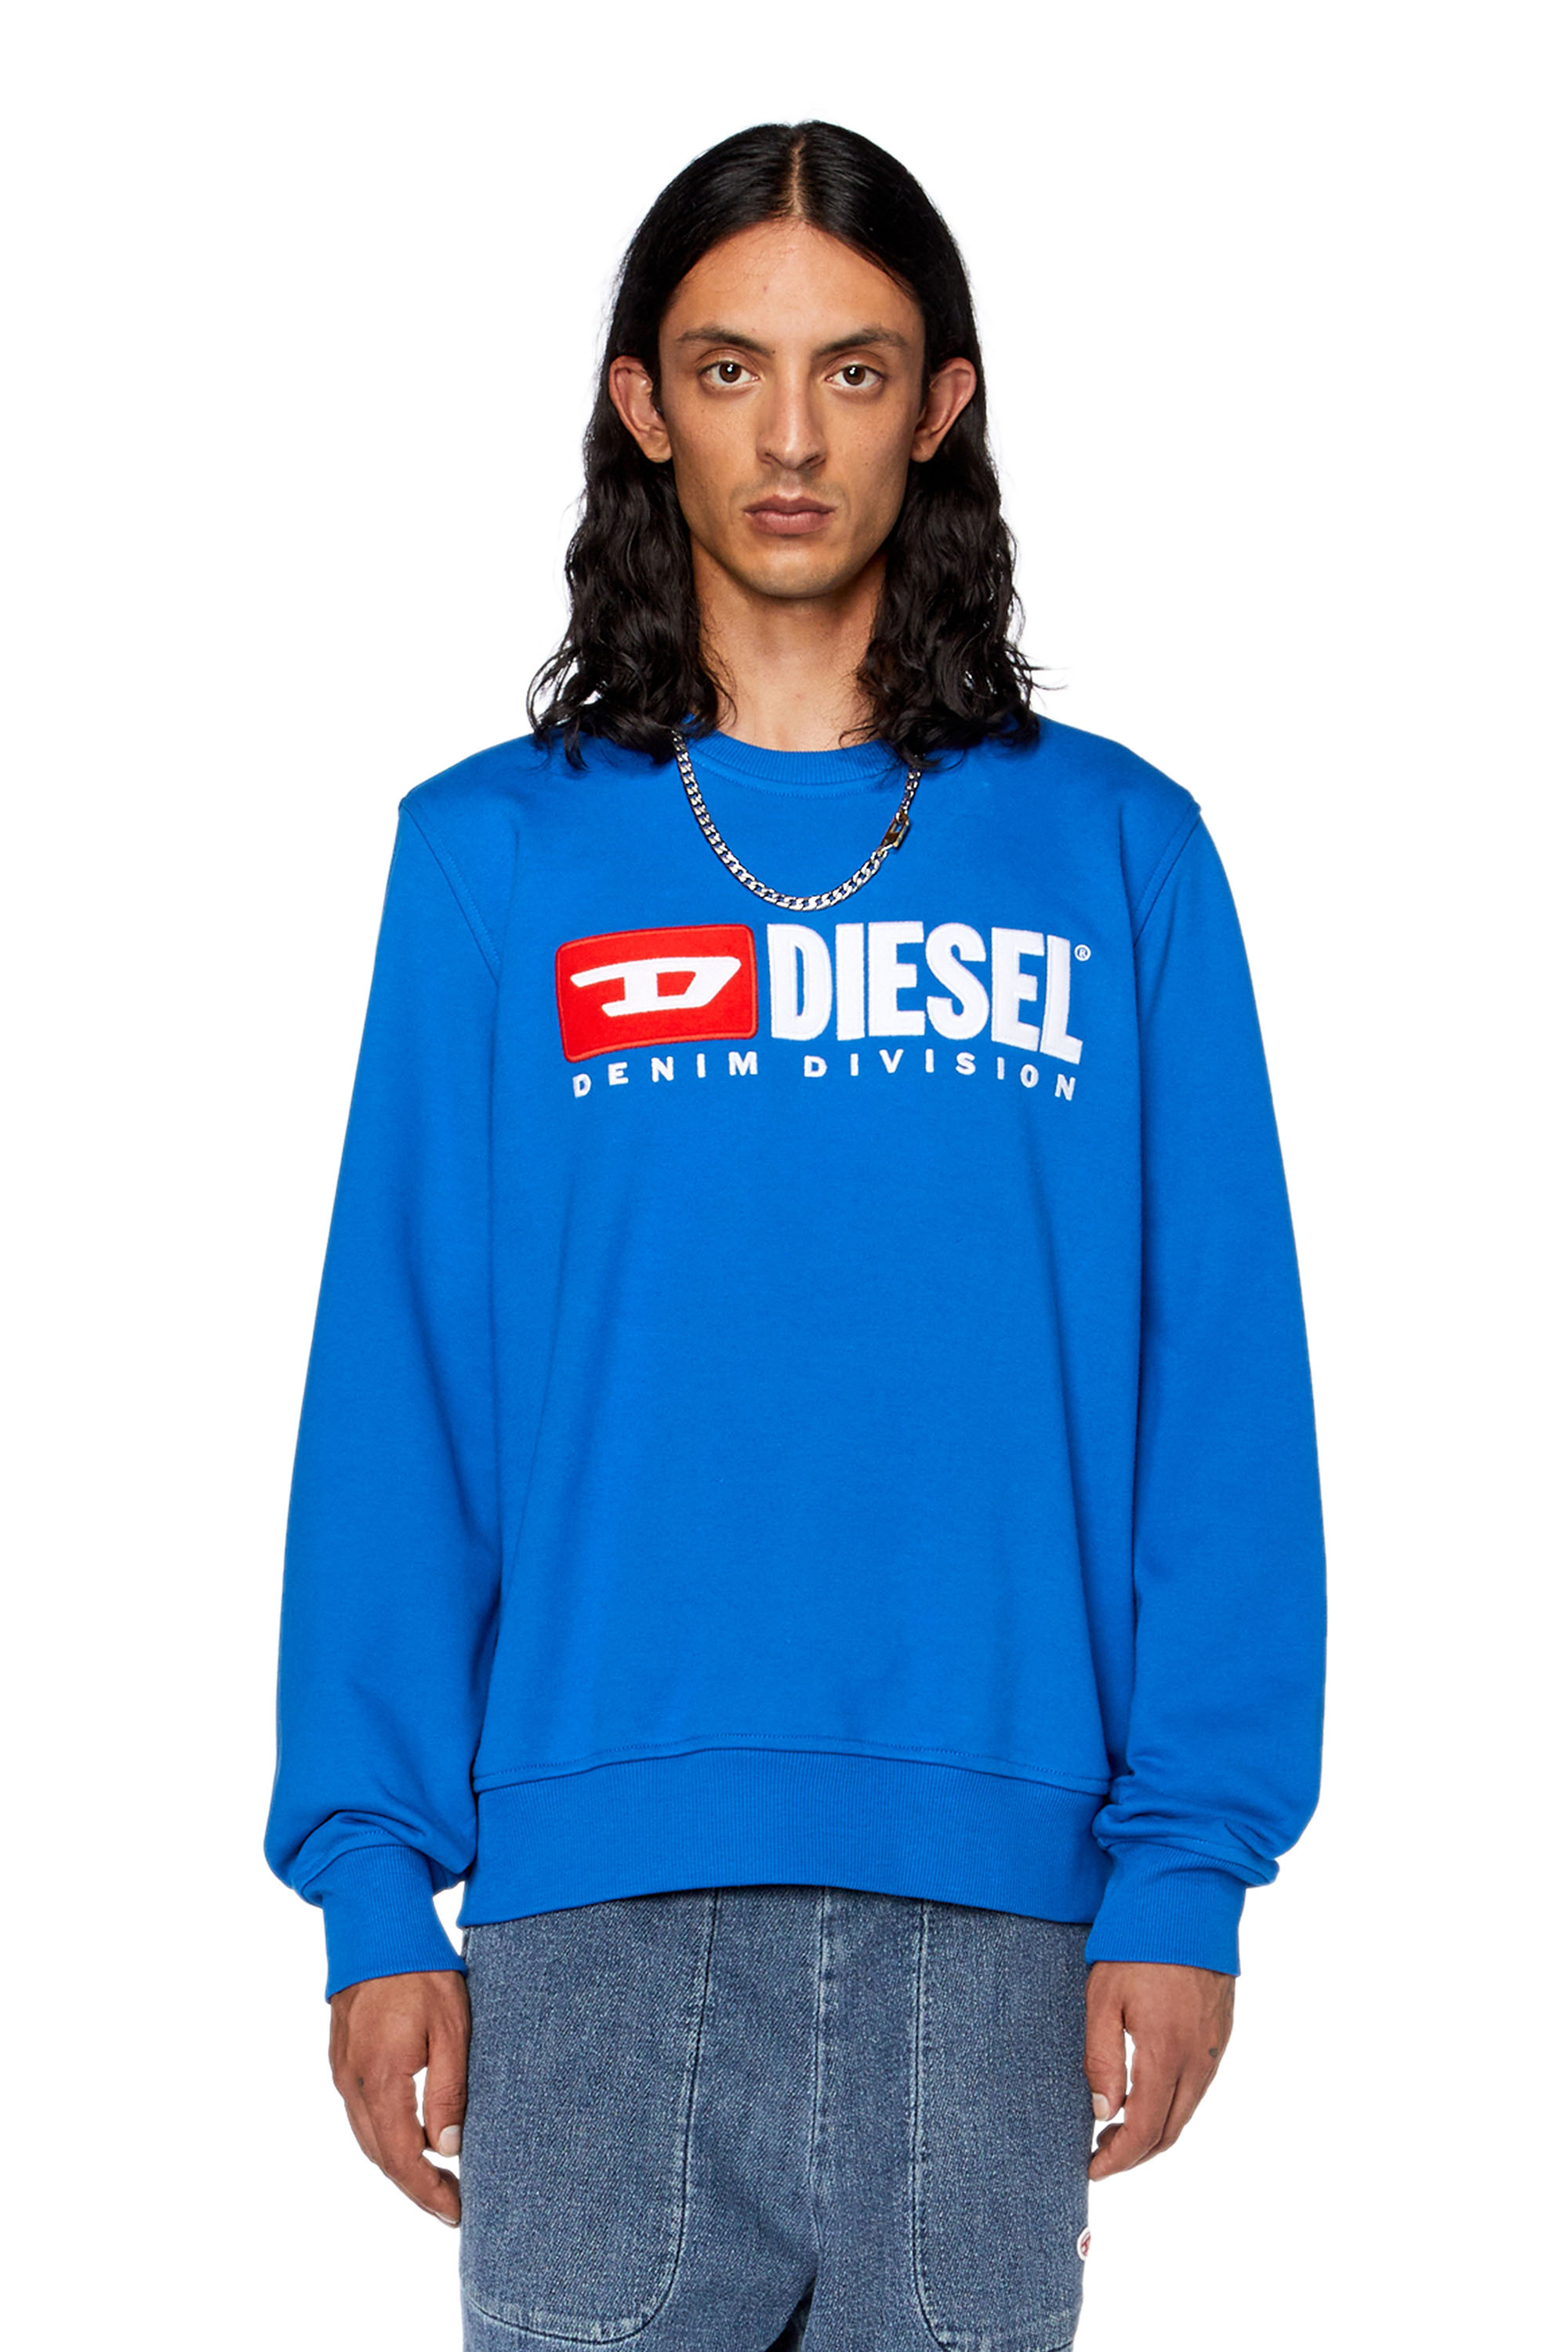 Diesel - S-GINN-DIV, Bleu - Image 1